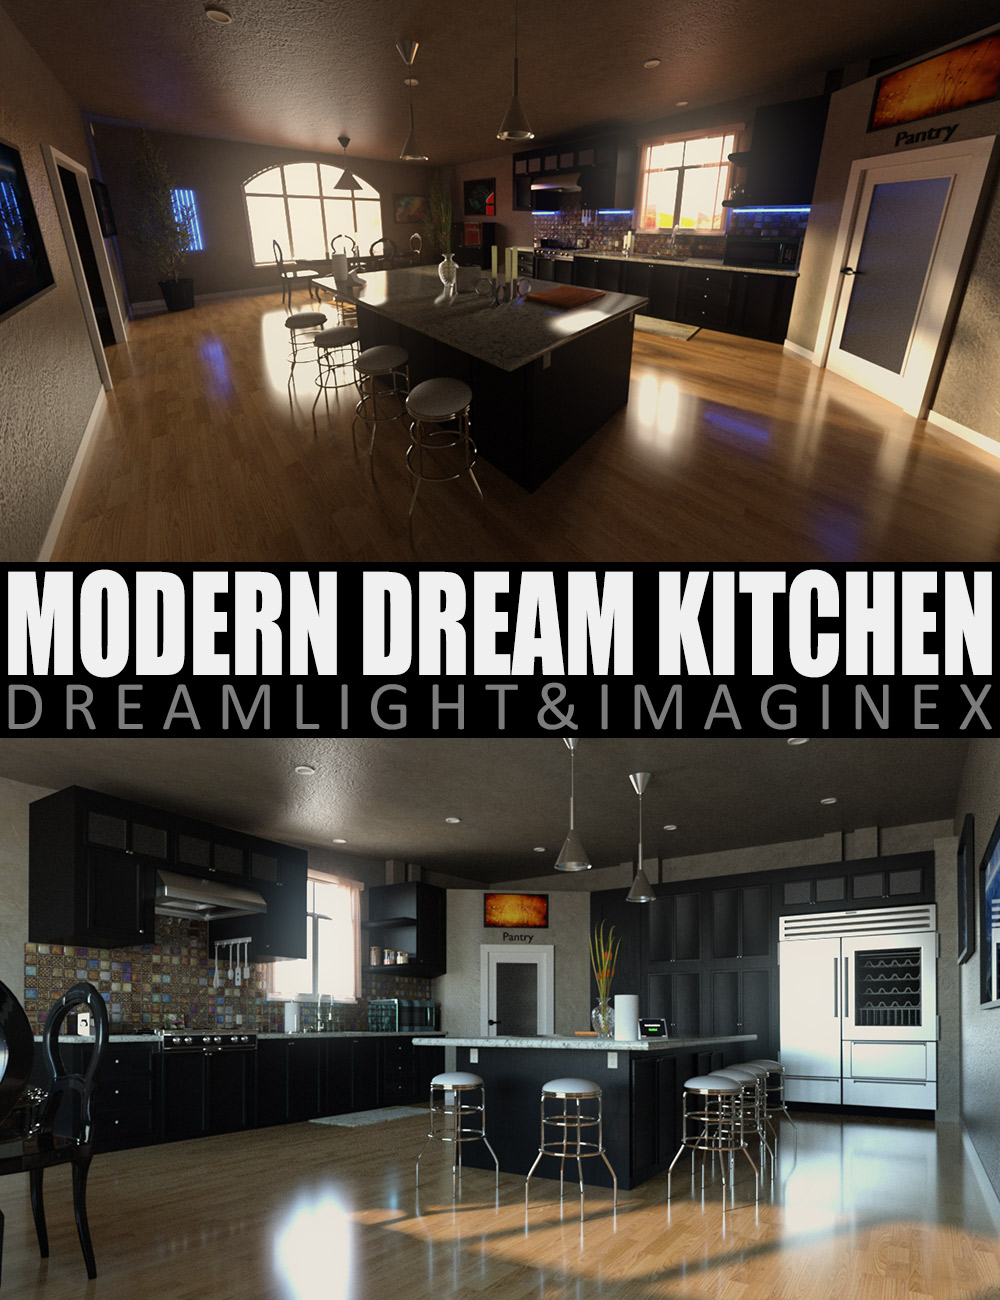 Modern Dream Kitchen by: DreamlightImagineX, 3D Models by Daz 3D